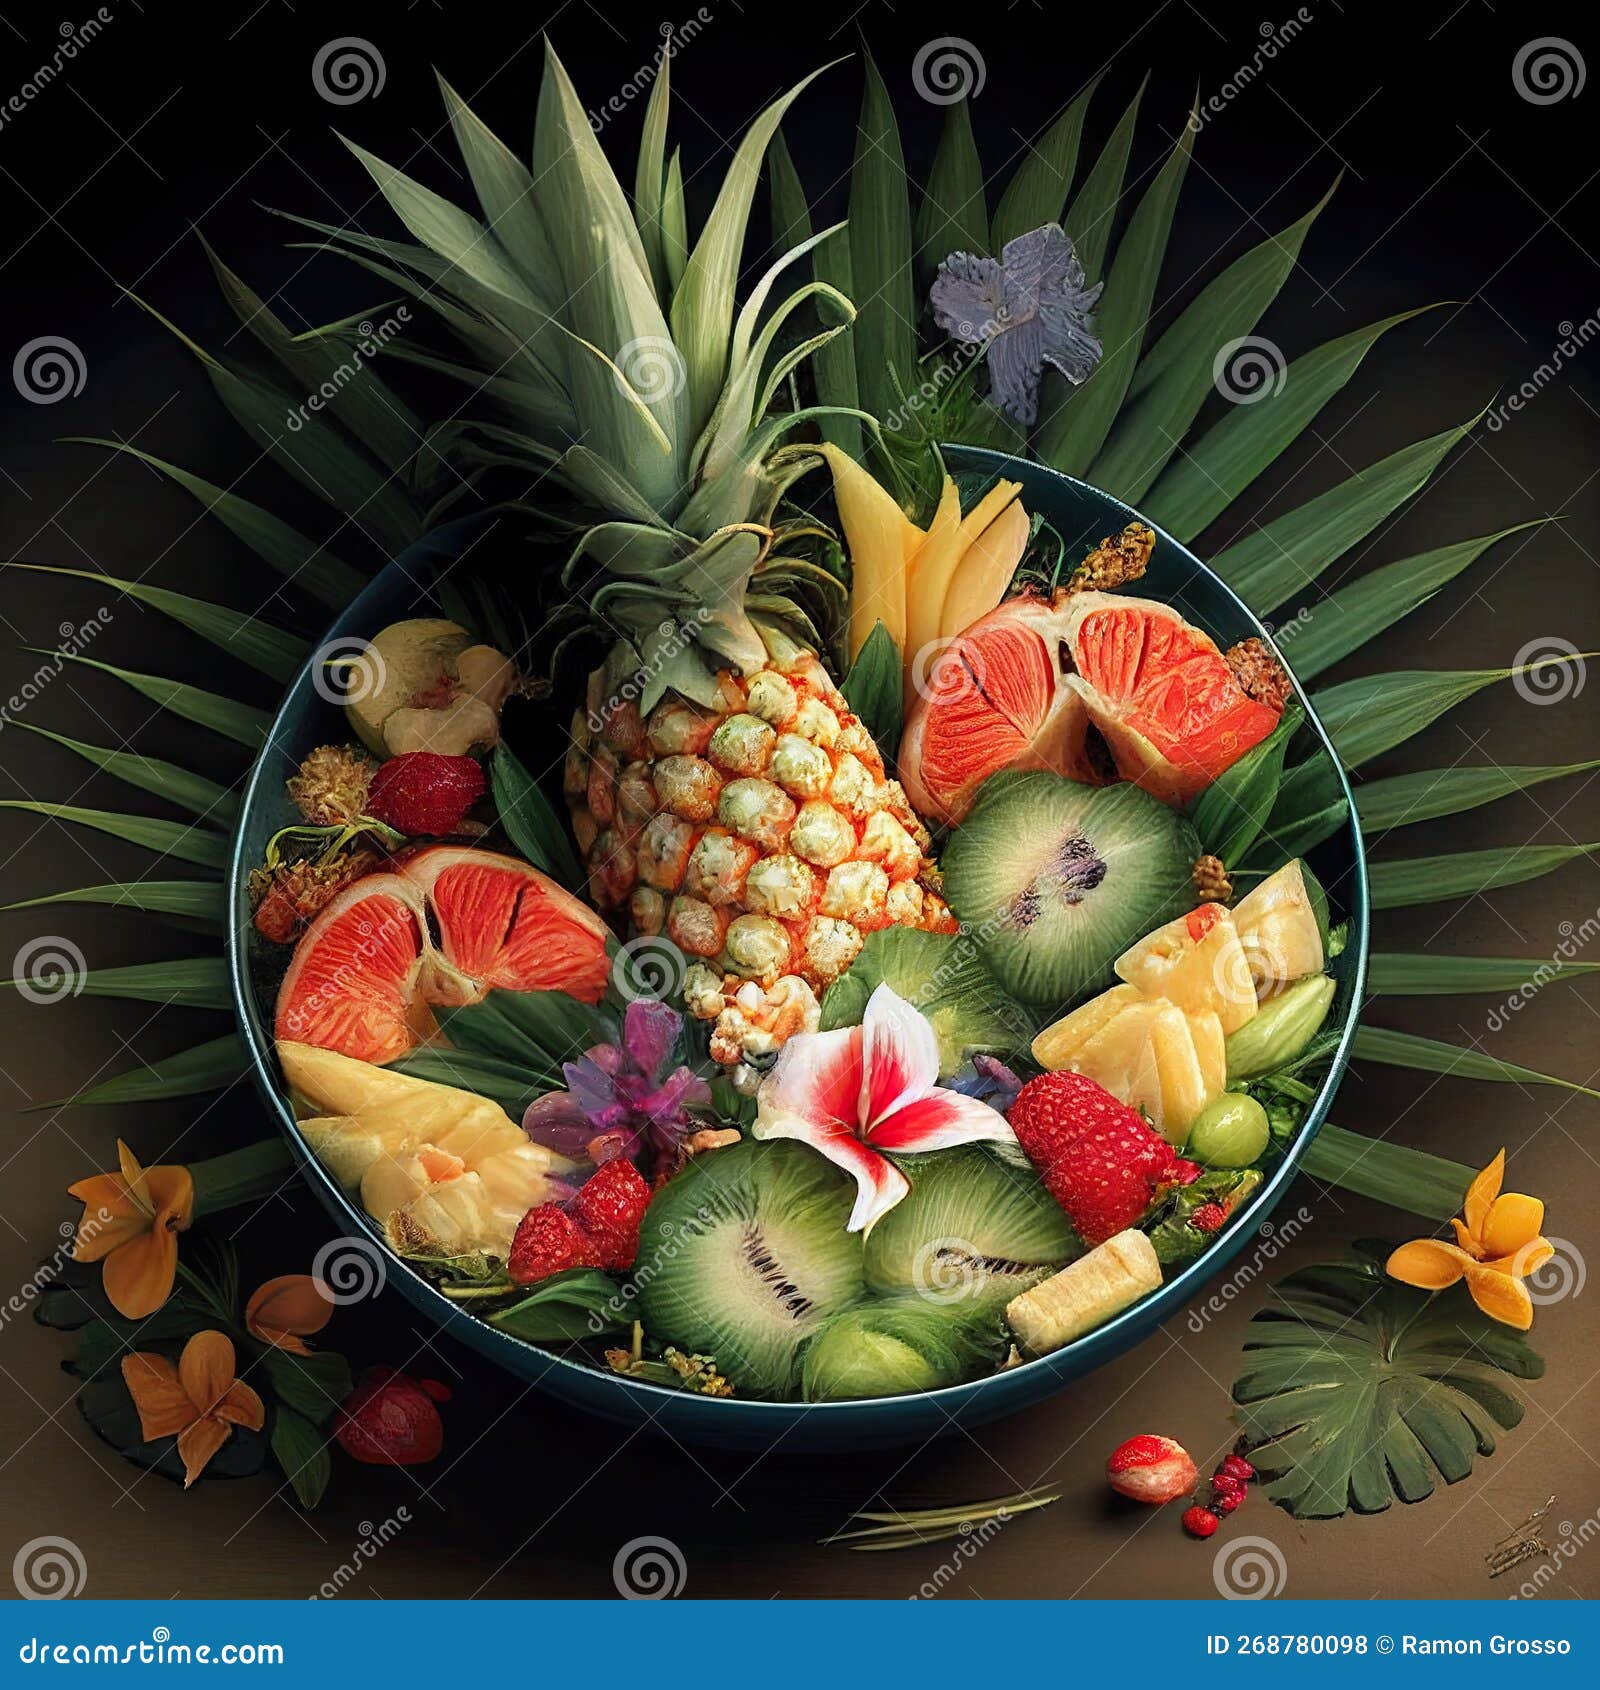 hawaian fruits and vegetales